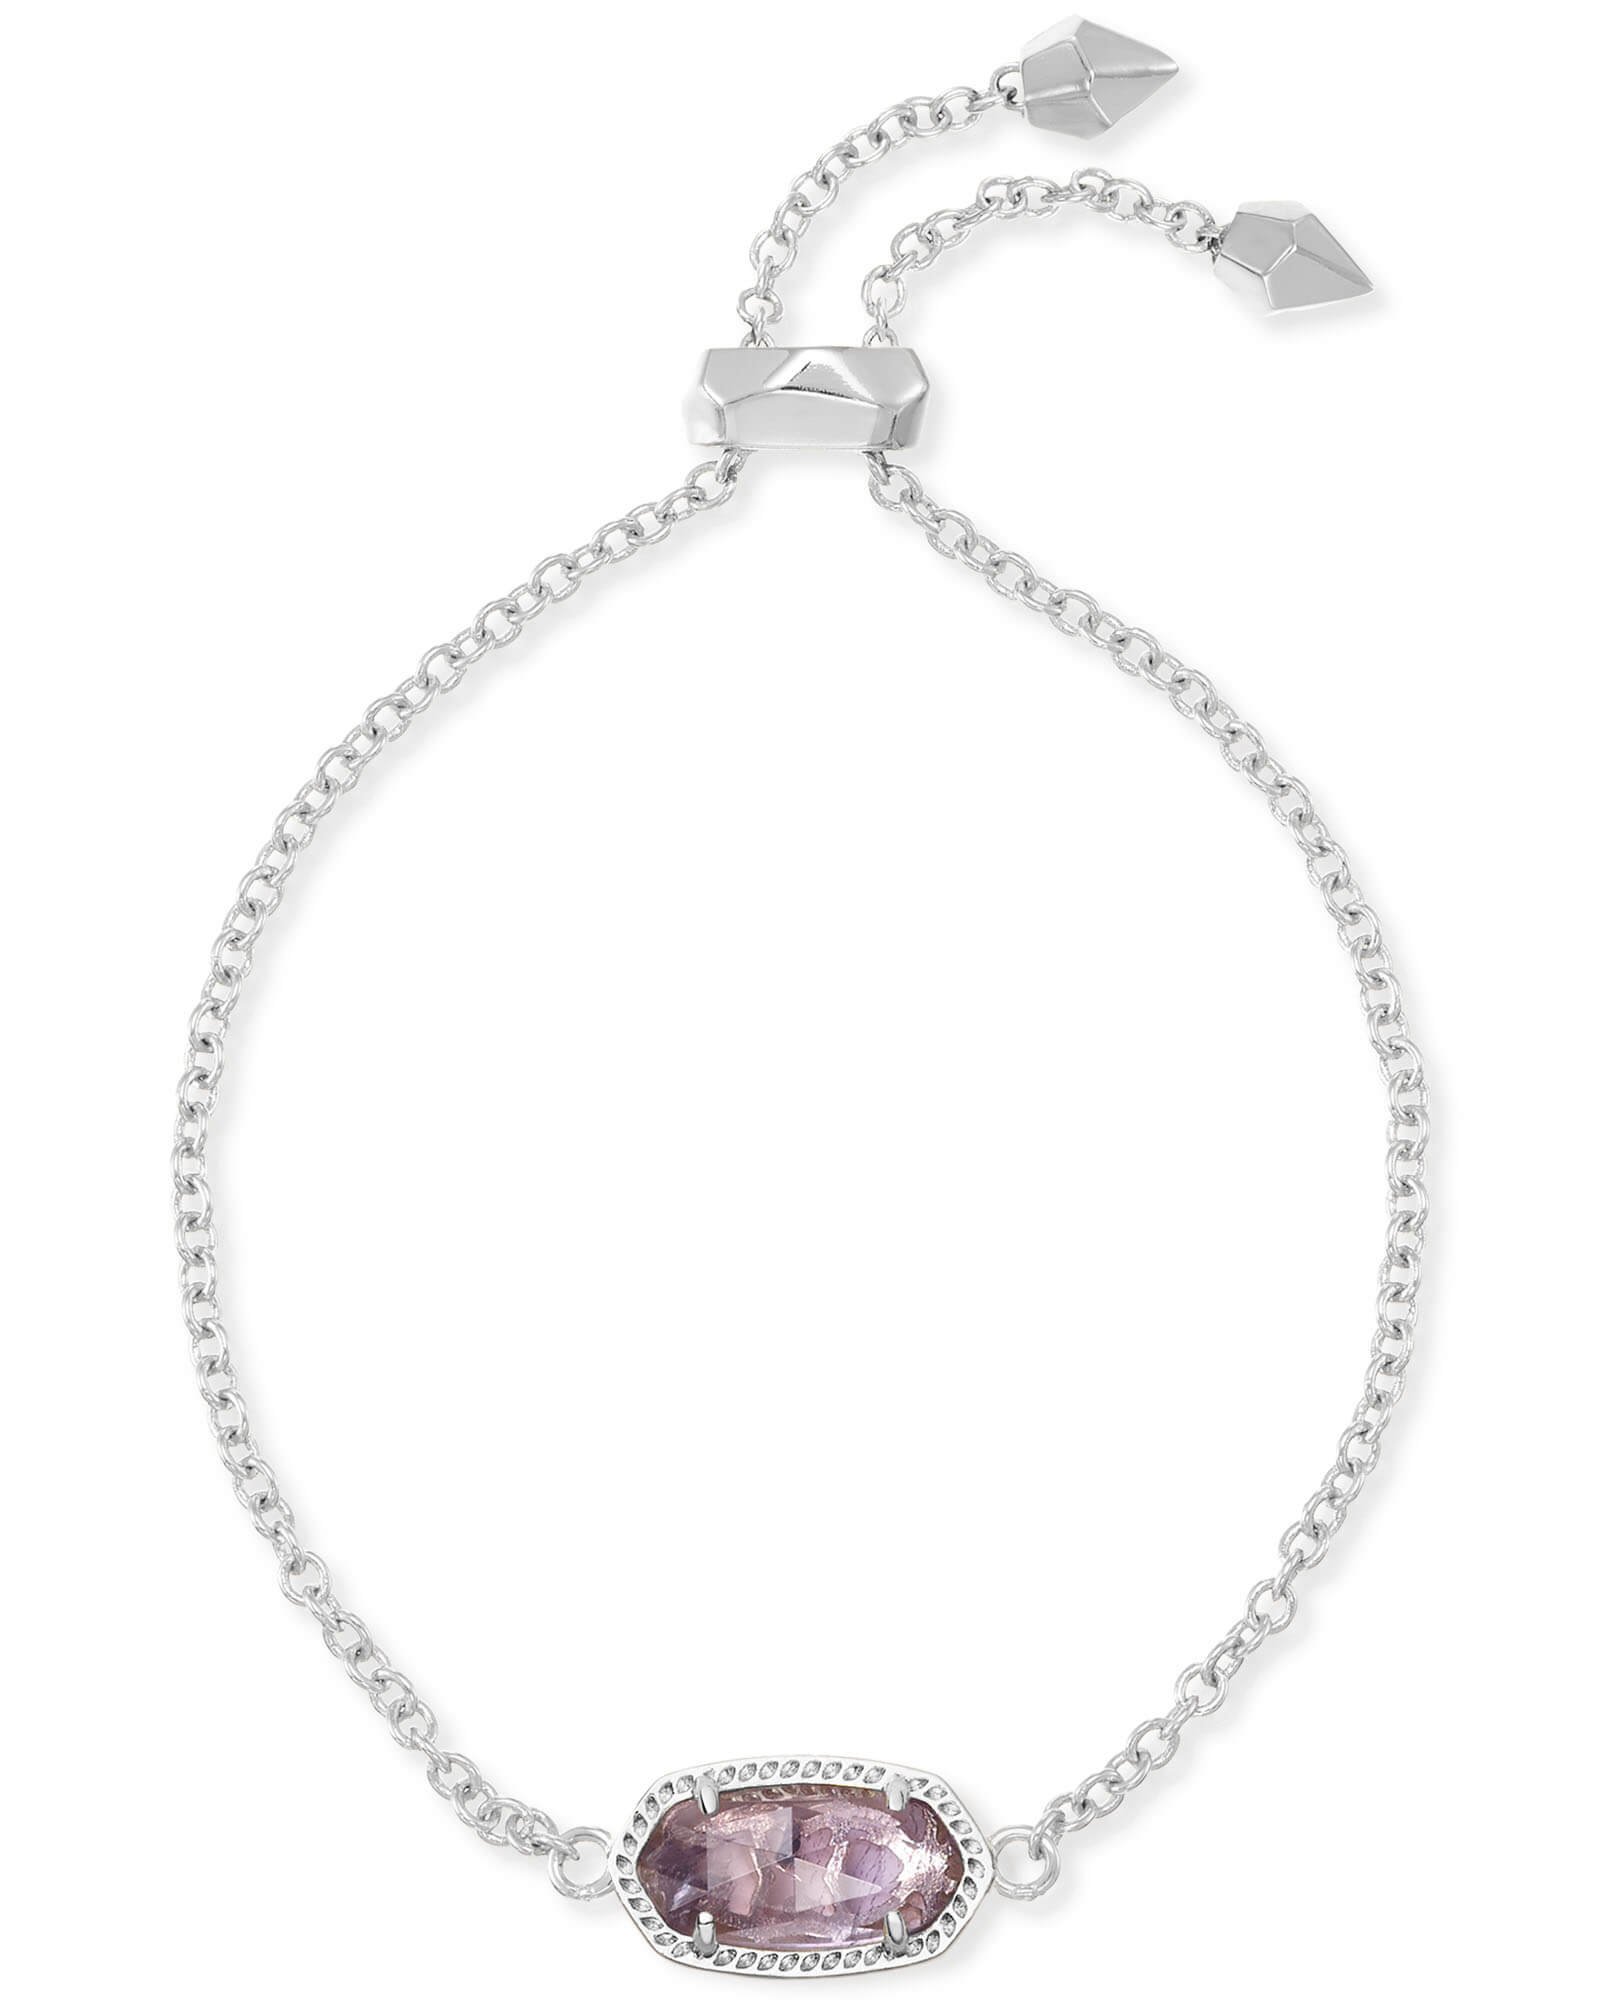 Kendra Scott Elaina Silver Adjustable Chain Bracelet in Amethyst | Genuine Amethyst